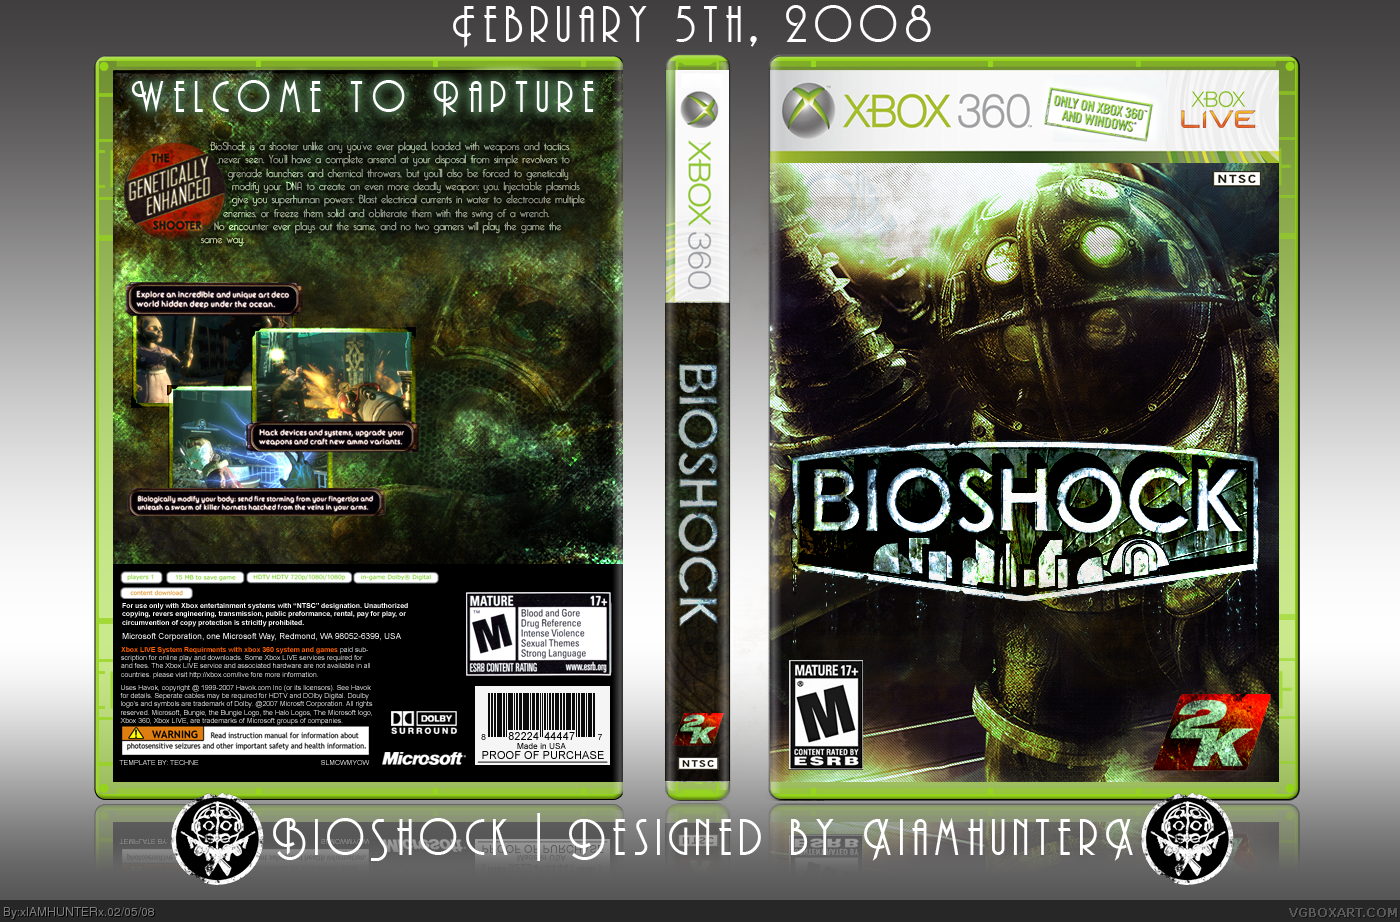 Игры xbox 360 телефон. Bioshock Xbox 360 обложка. Биошок 2 обложка иксбокс360. Bioshock 2 Xbox 360 обложка. Хвох 360 диск Bioshock 2.